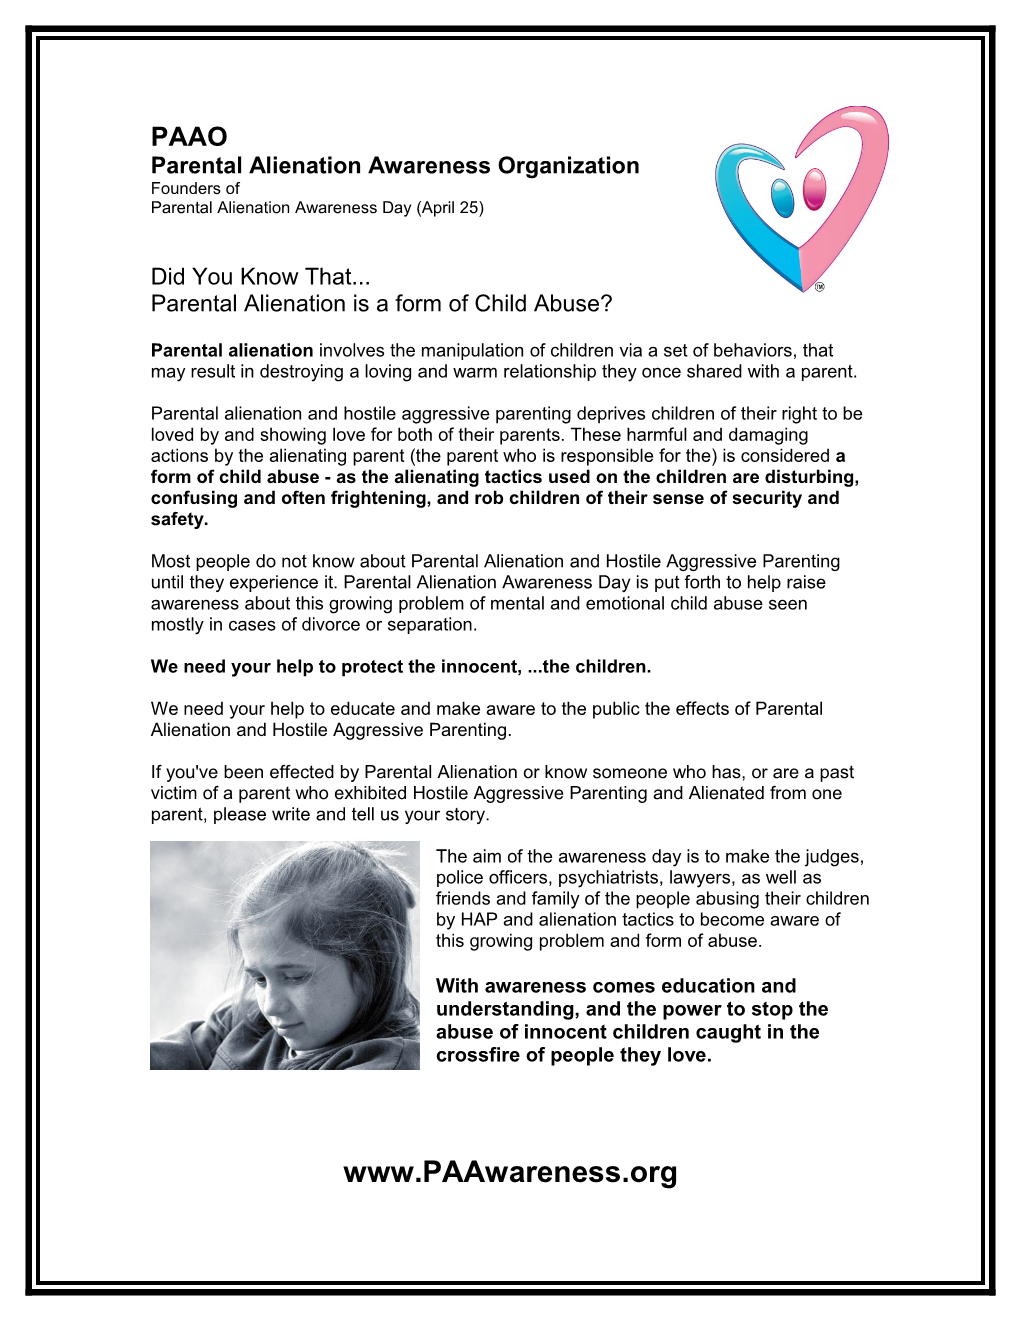 Parental Alienation Awareness Organization